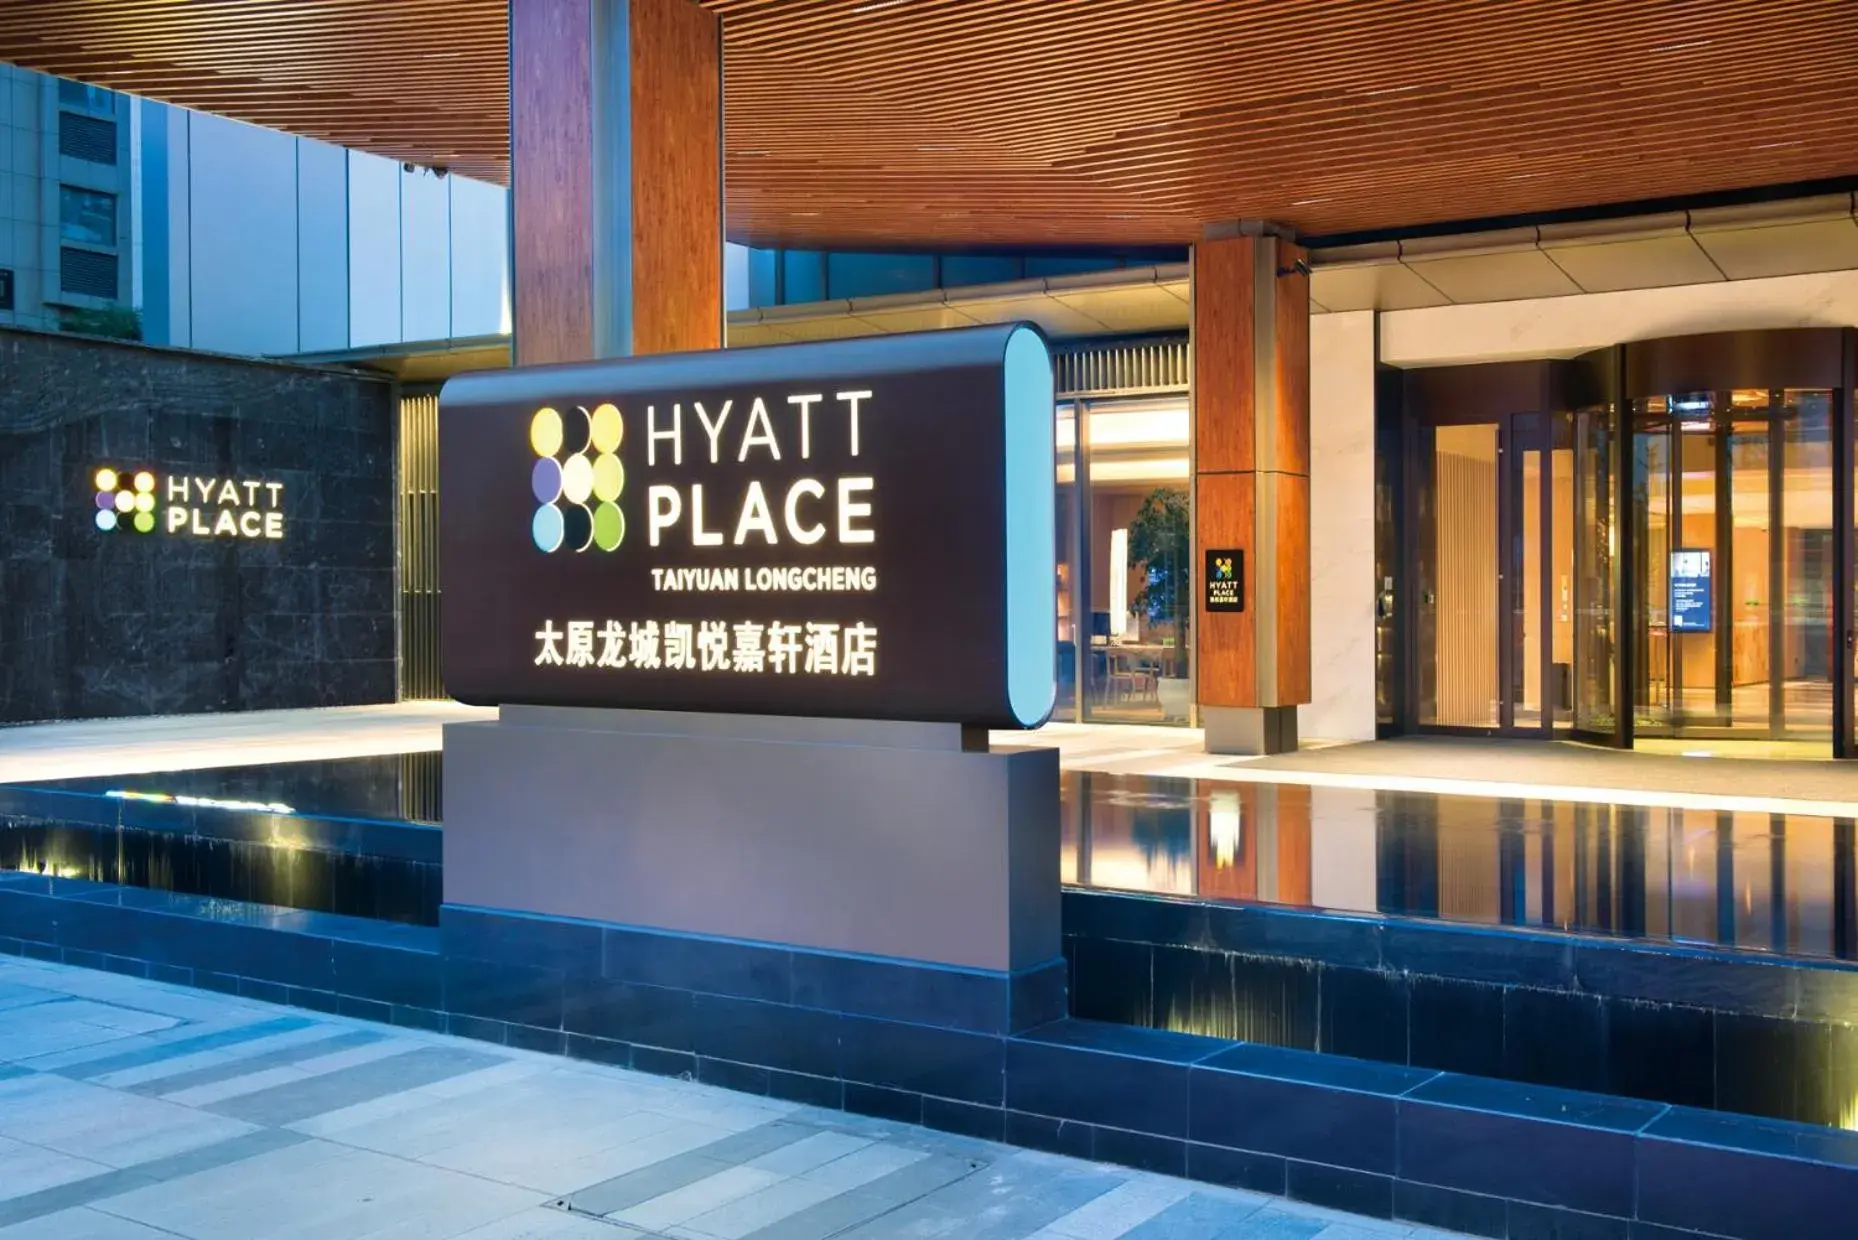 Property logo or sign in Hyatt Place Taiyuan Longcheng